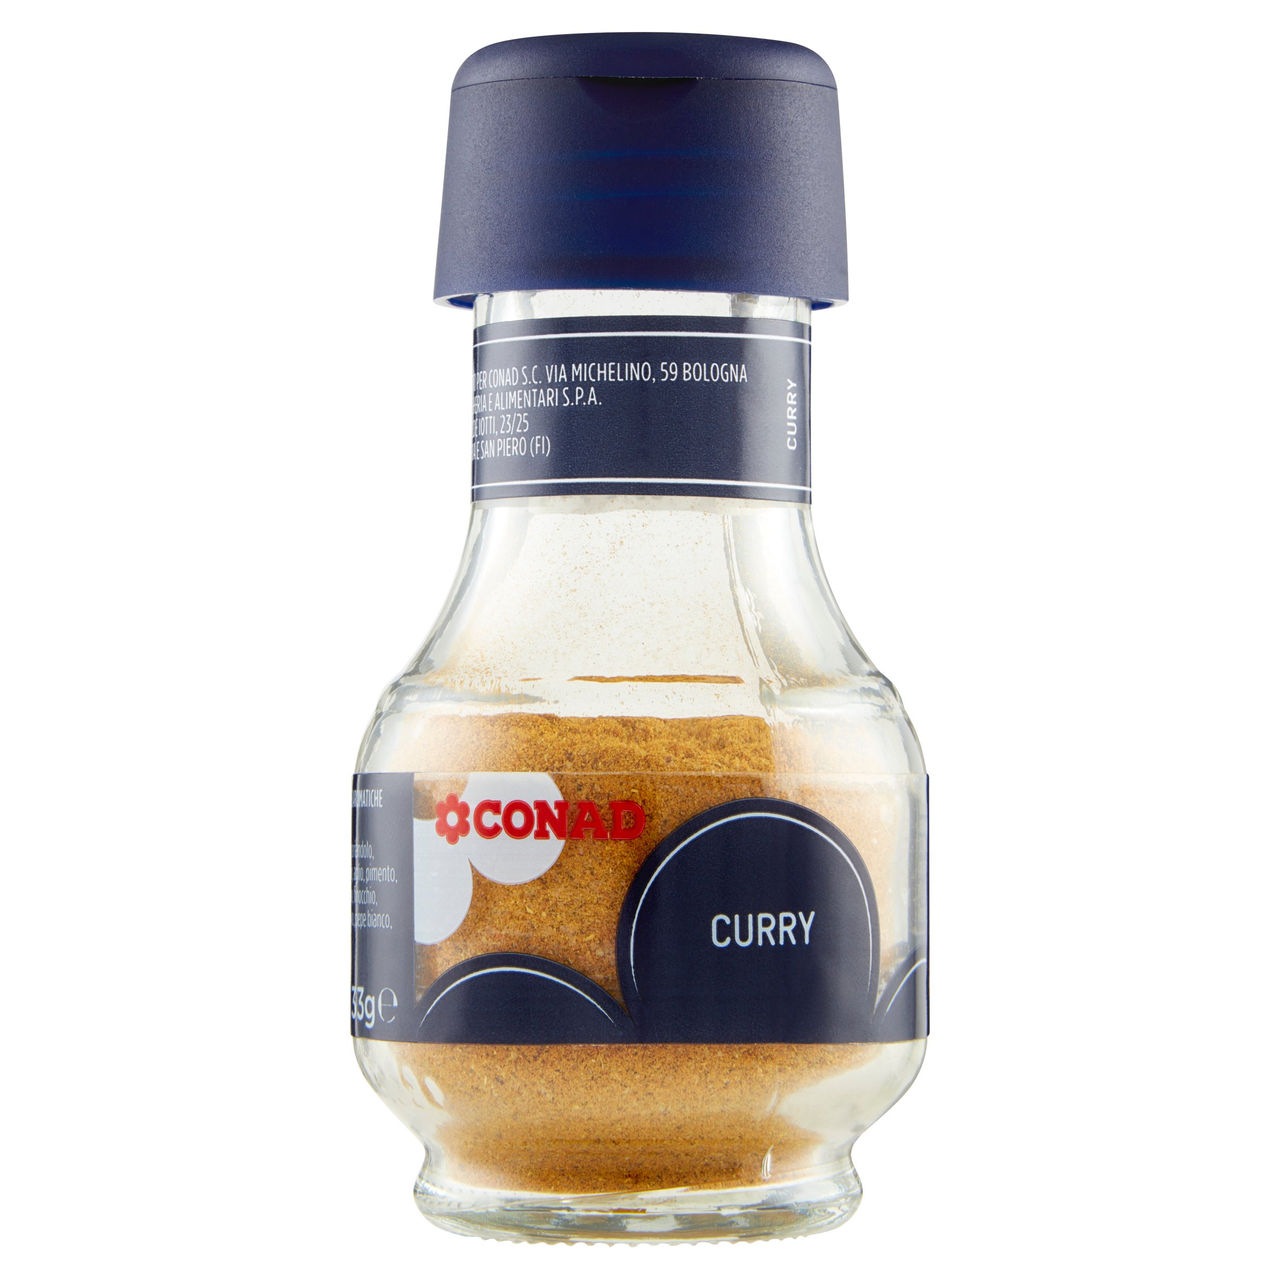 Curry 33 g Conad in vendita online